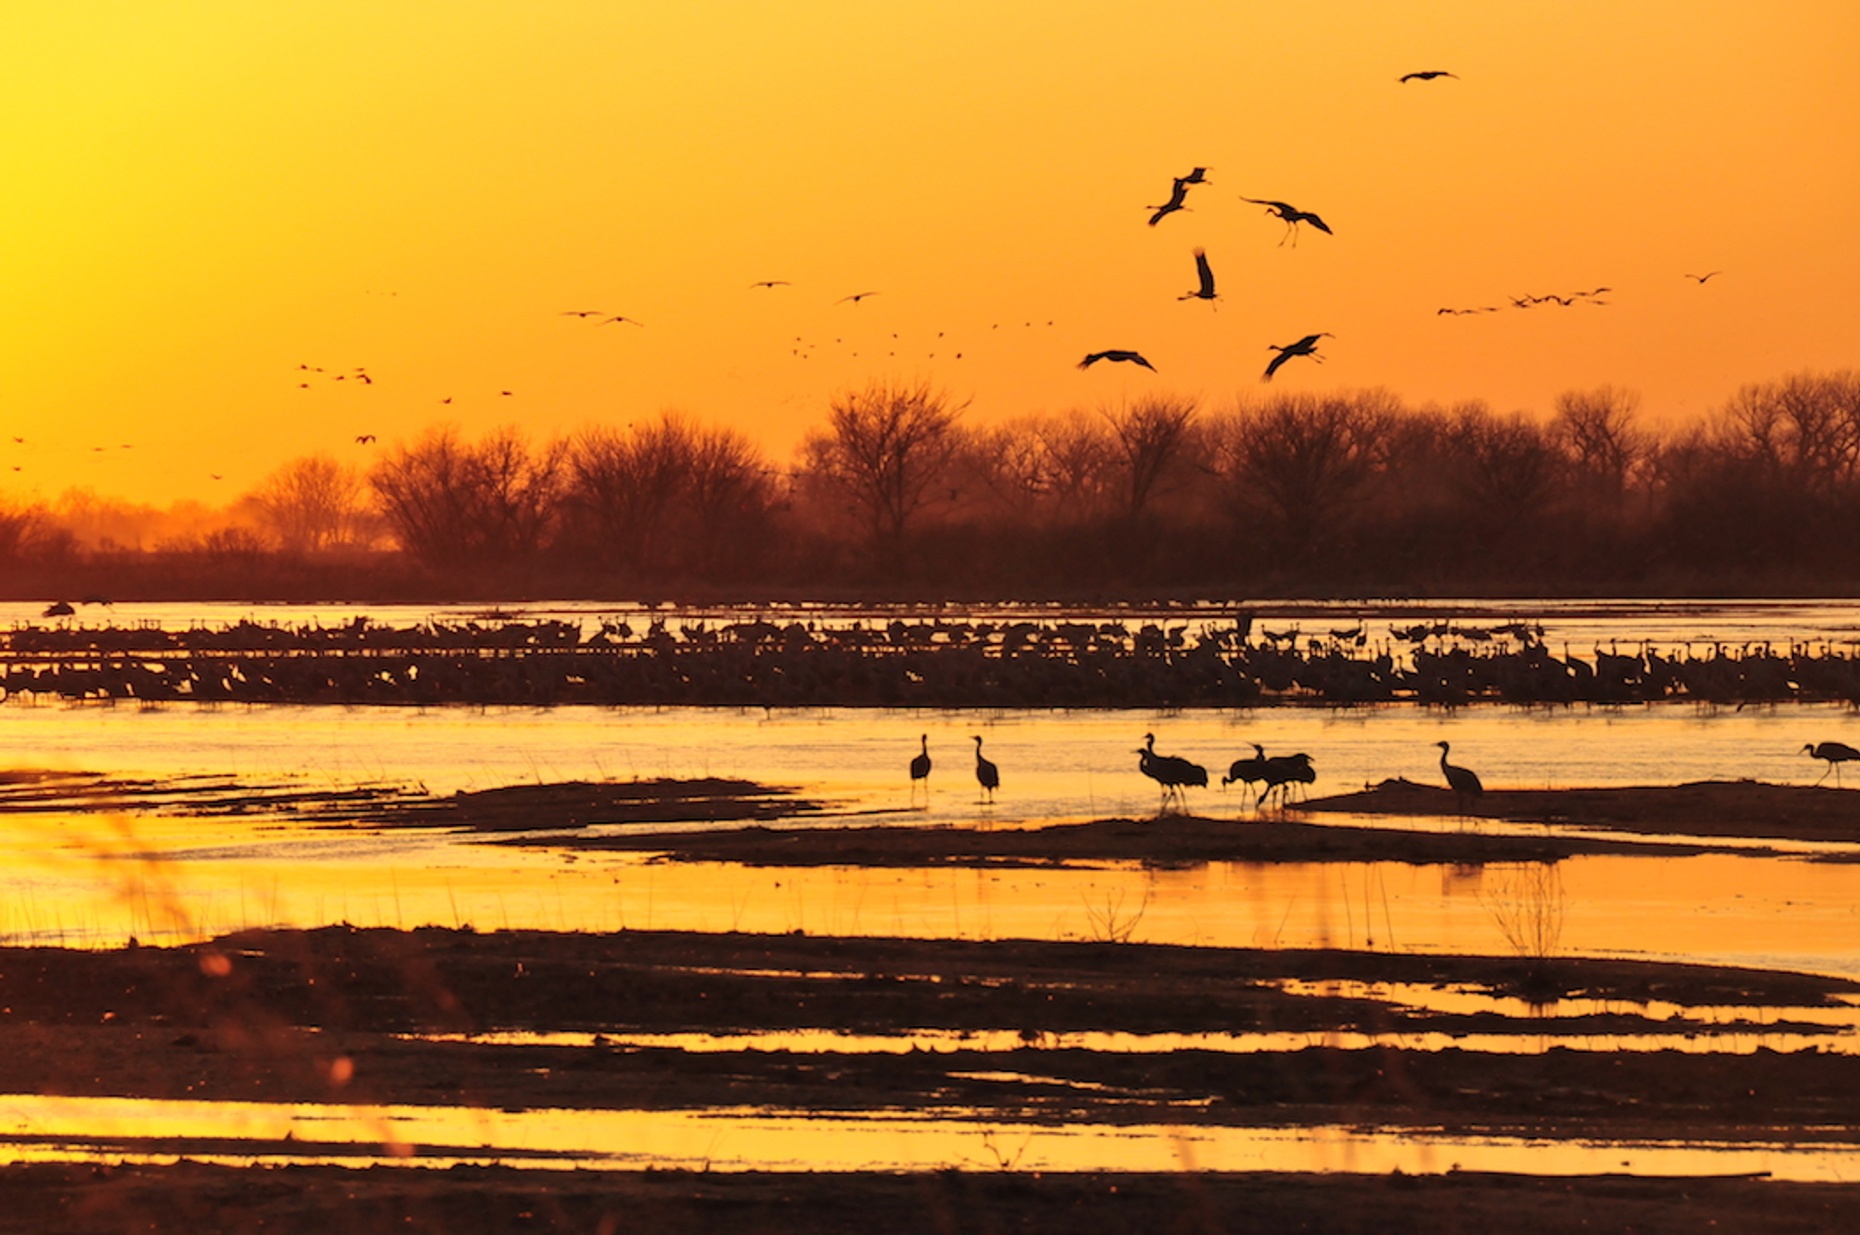 Evening Platte River Birding Tour